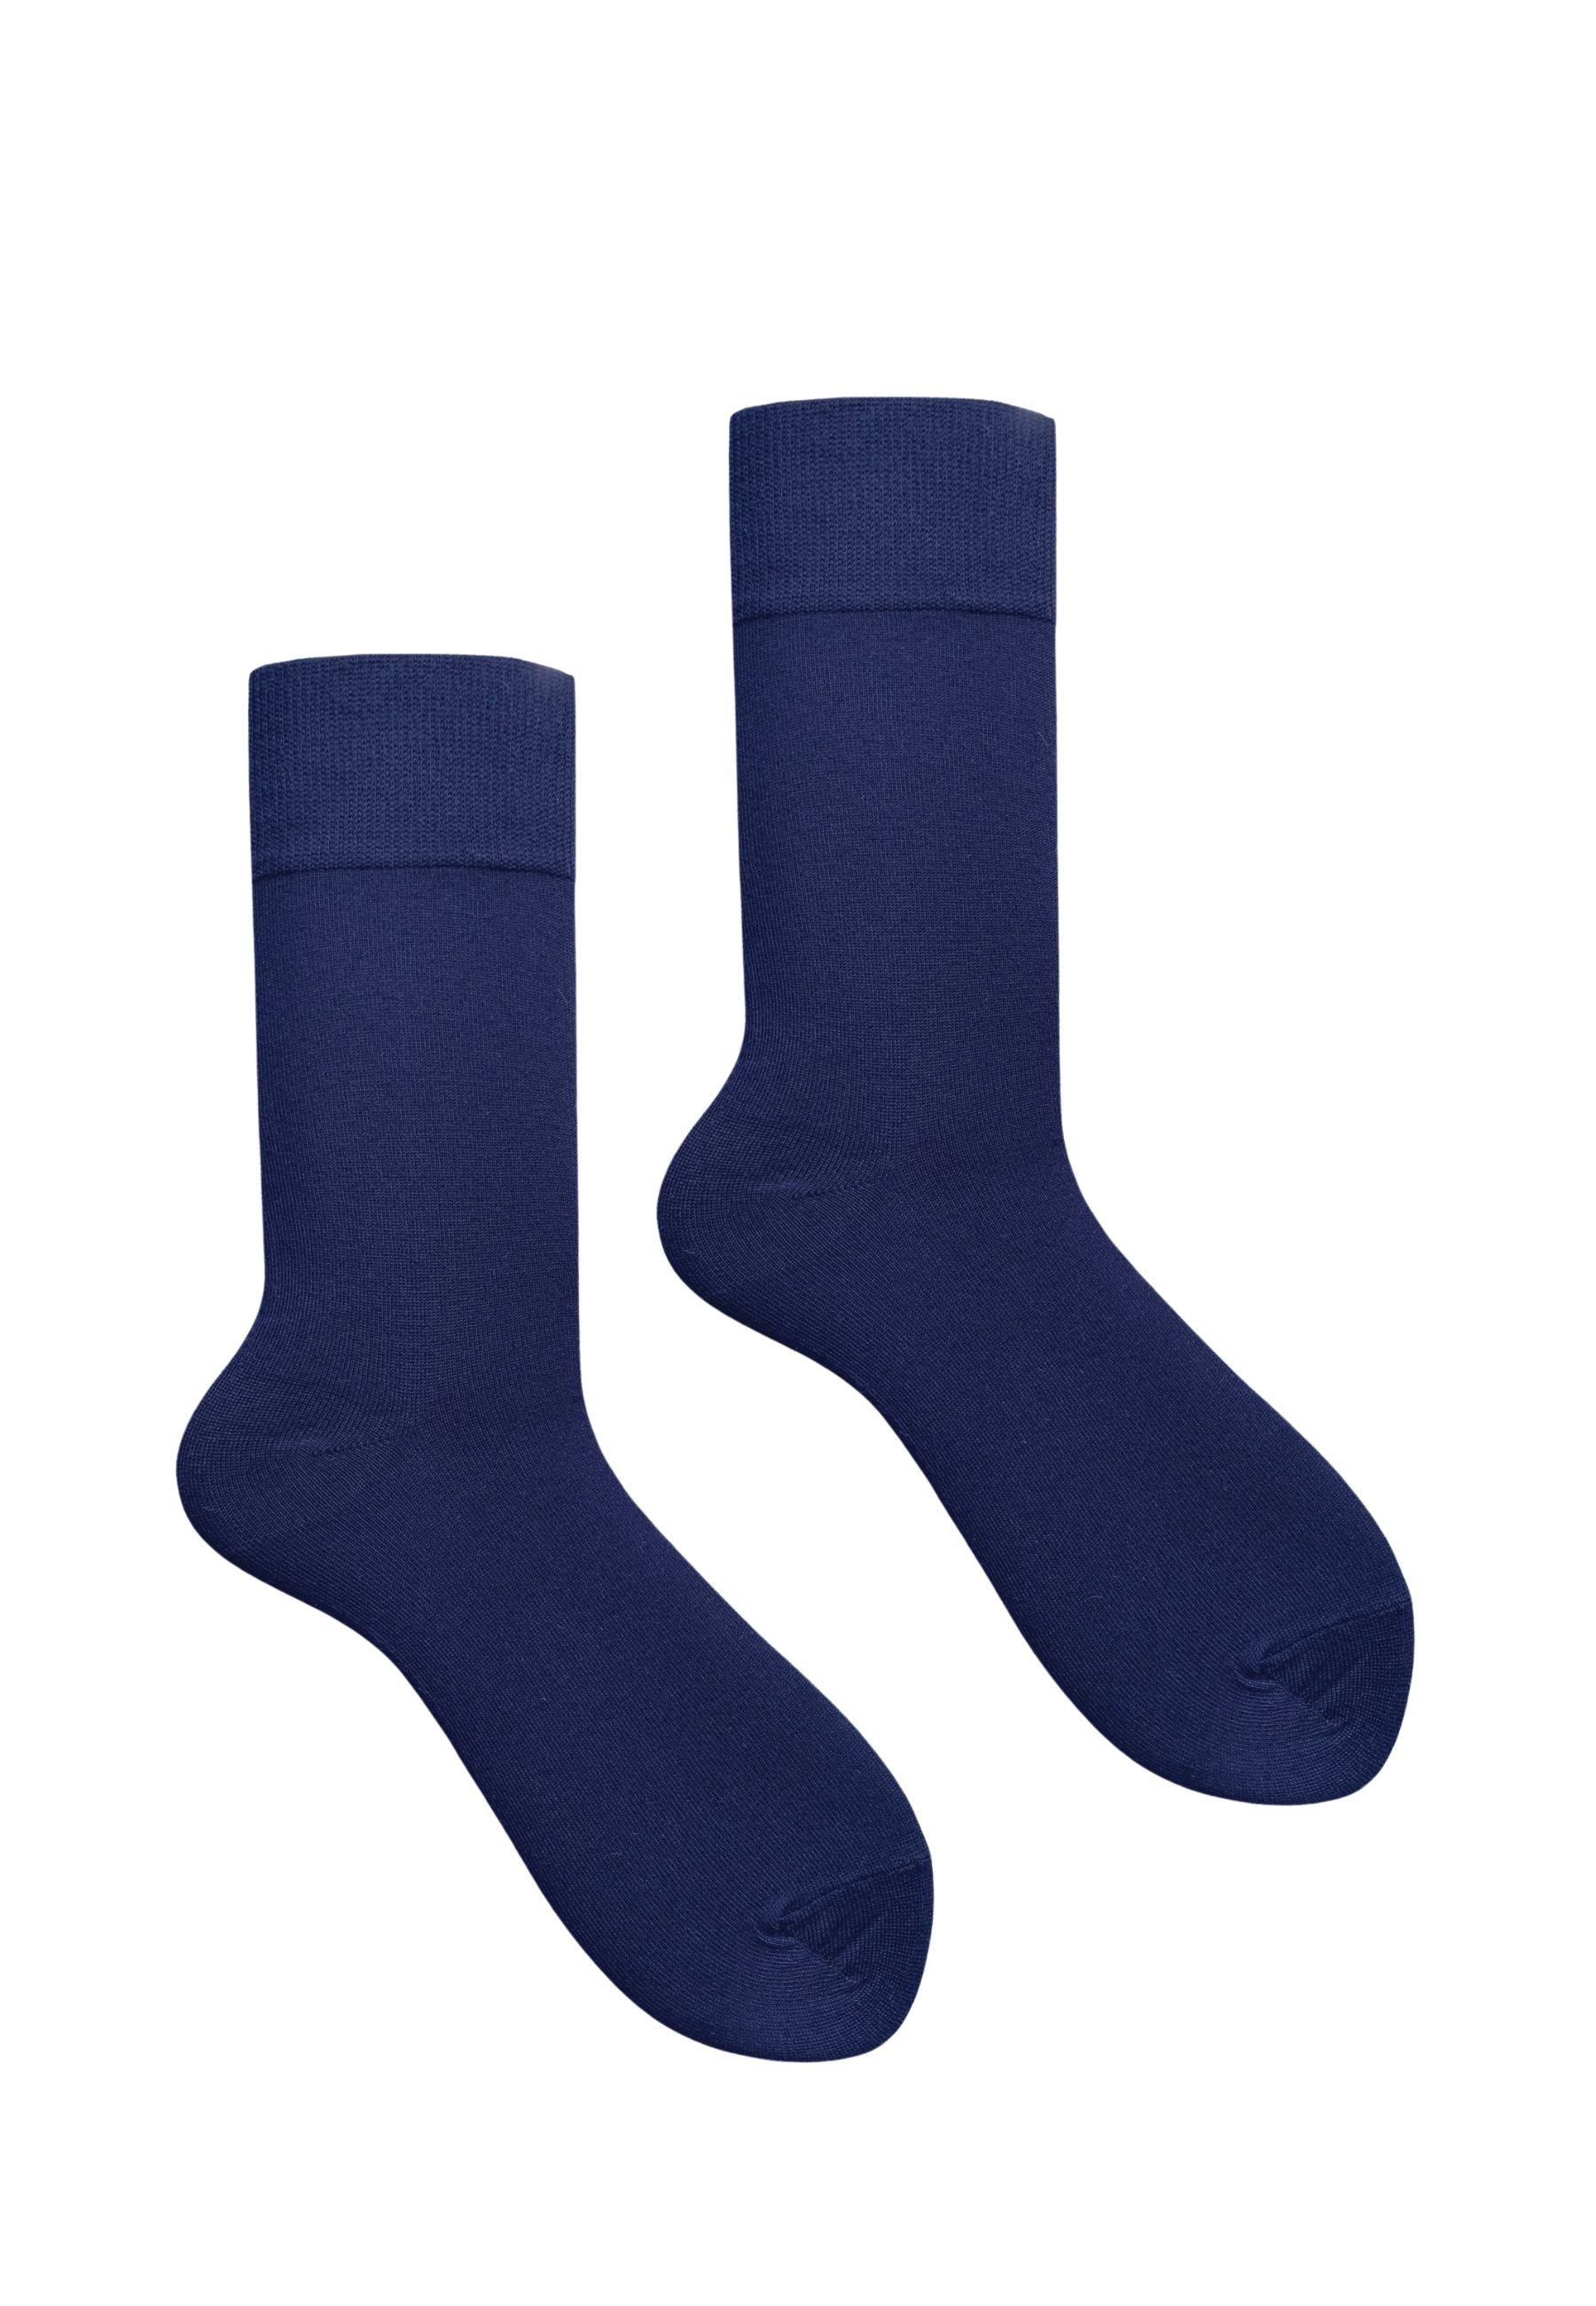 BAUMWOLLE PAAR HESE BLAU SOX Socken ELEGANT 4 Basicsocken